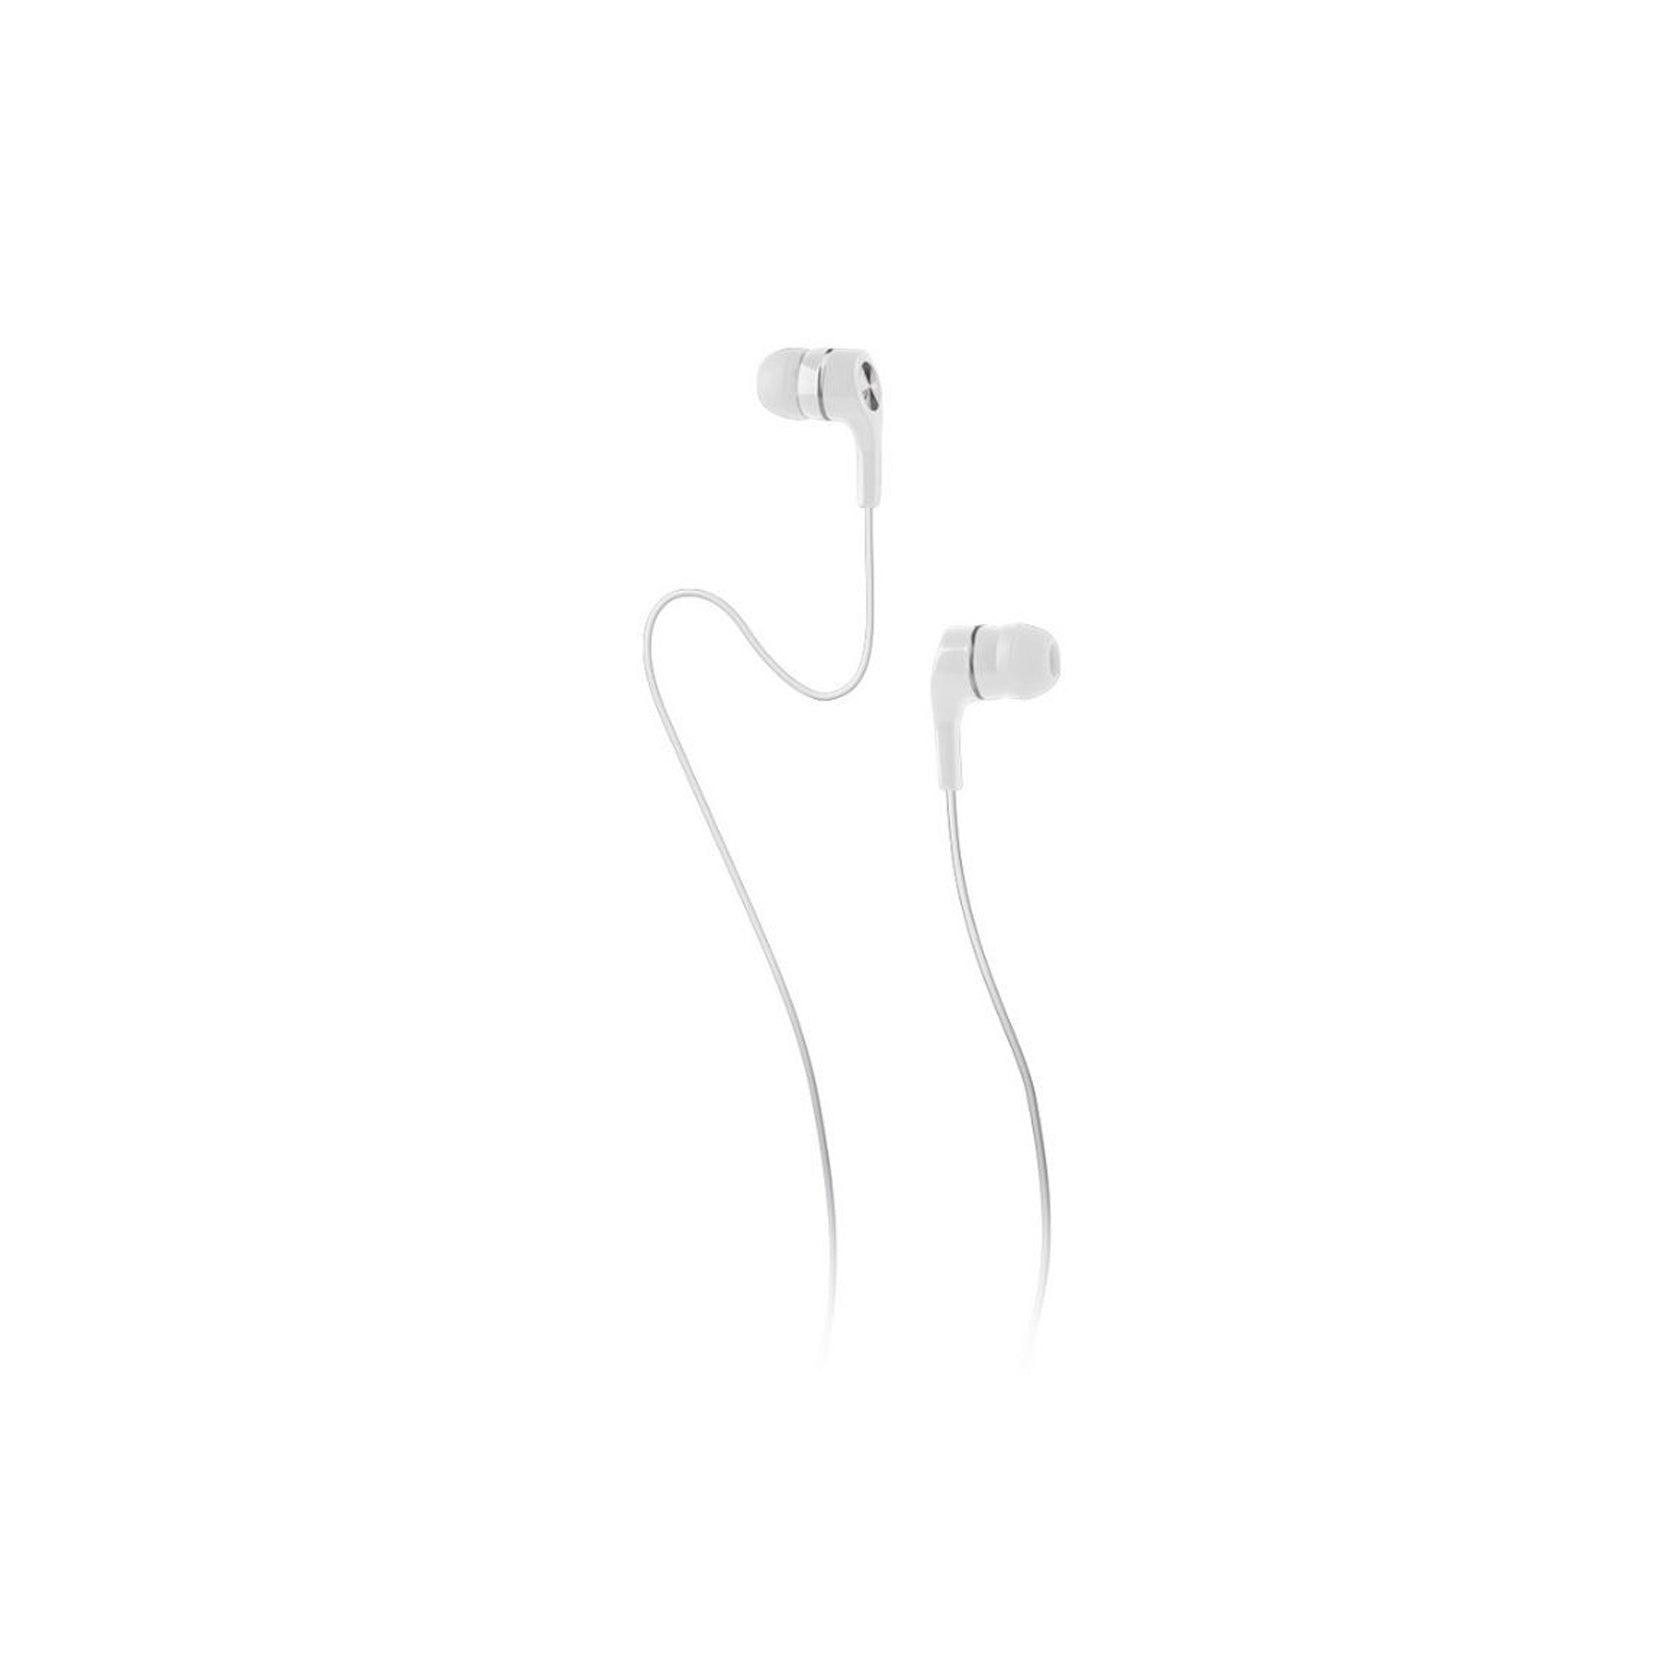 maXlife Wired Earphones White - MXEP-01 - Kosmos Renew